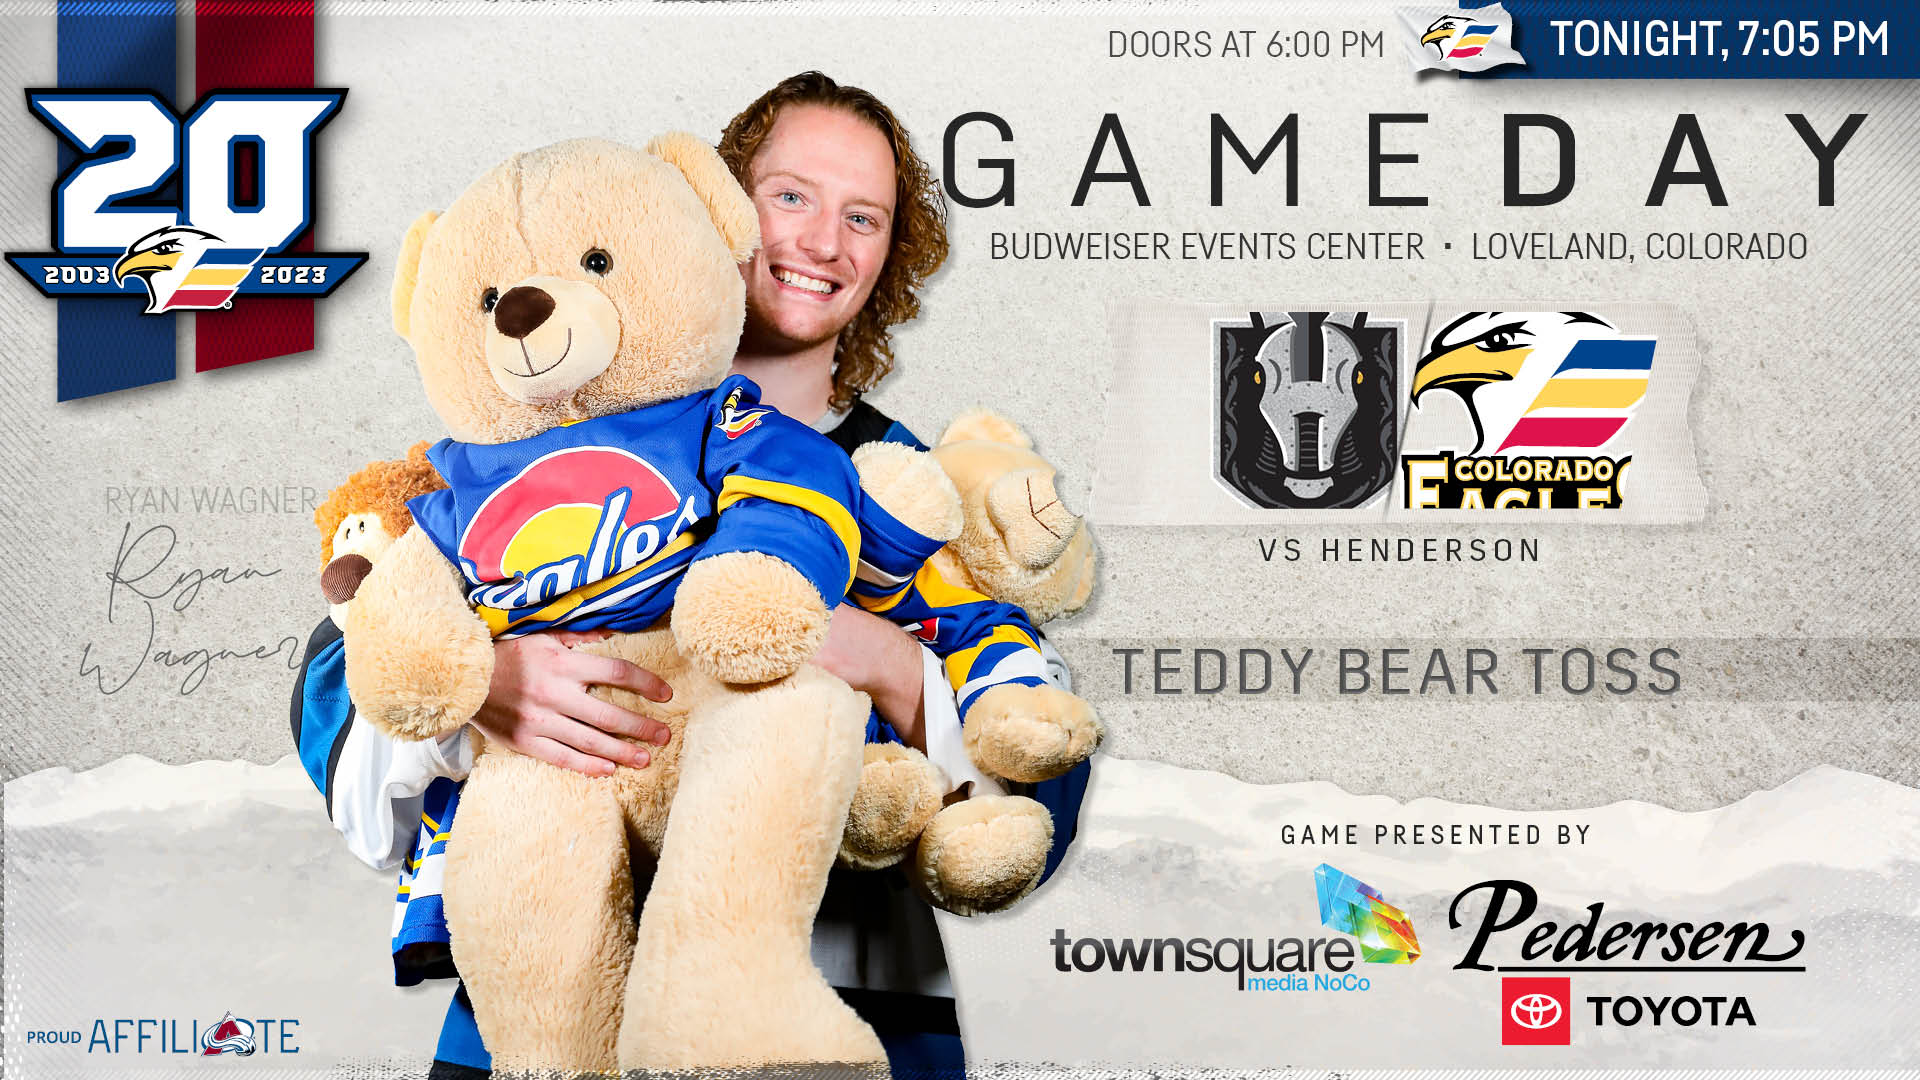 Teddy Bear Toss with the Providence Bruins